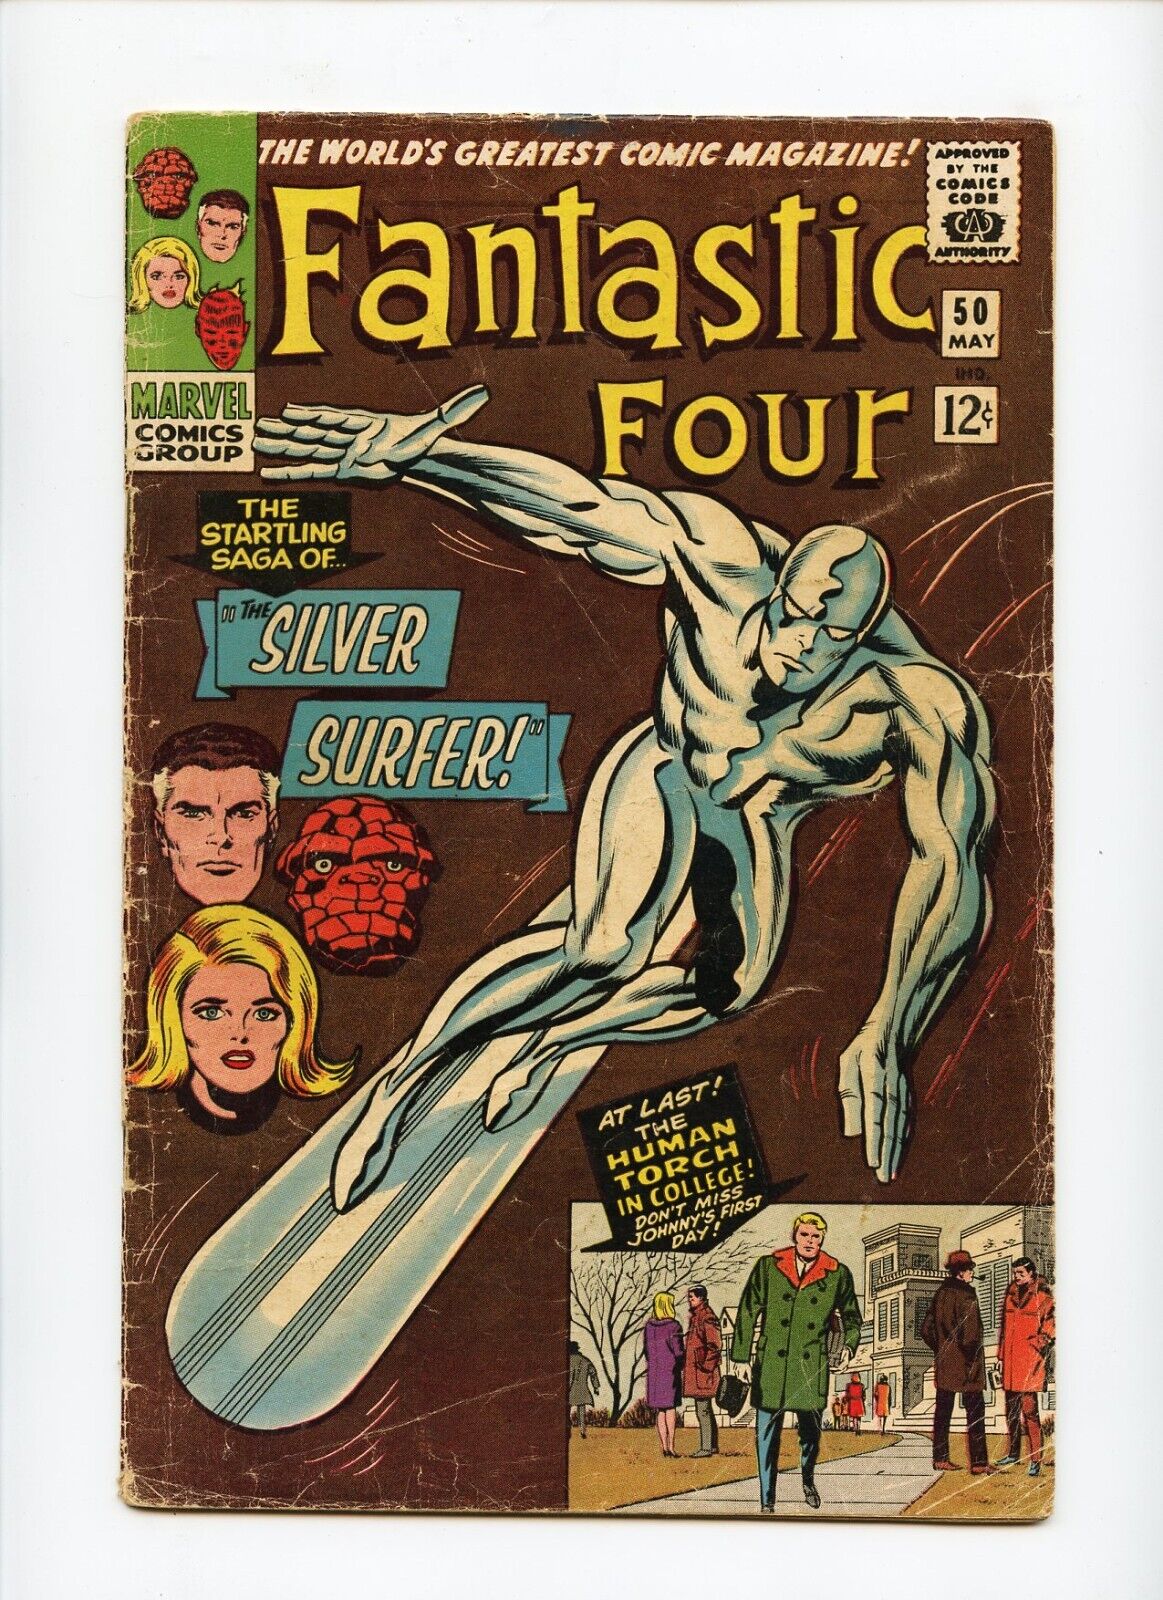 Fantastic Four #50 Marvel Comics Lower Grade